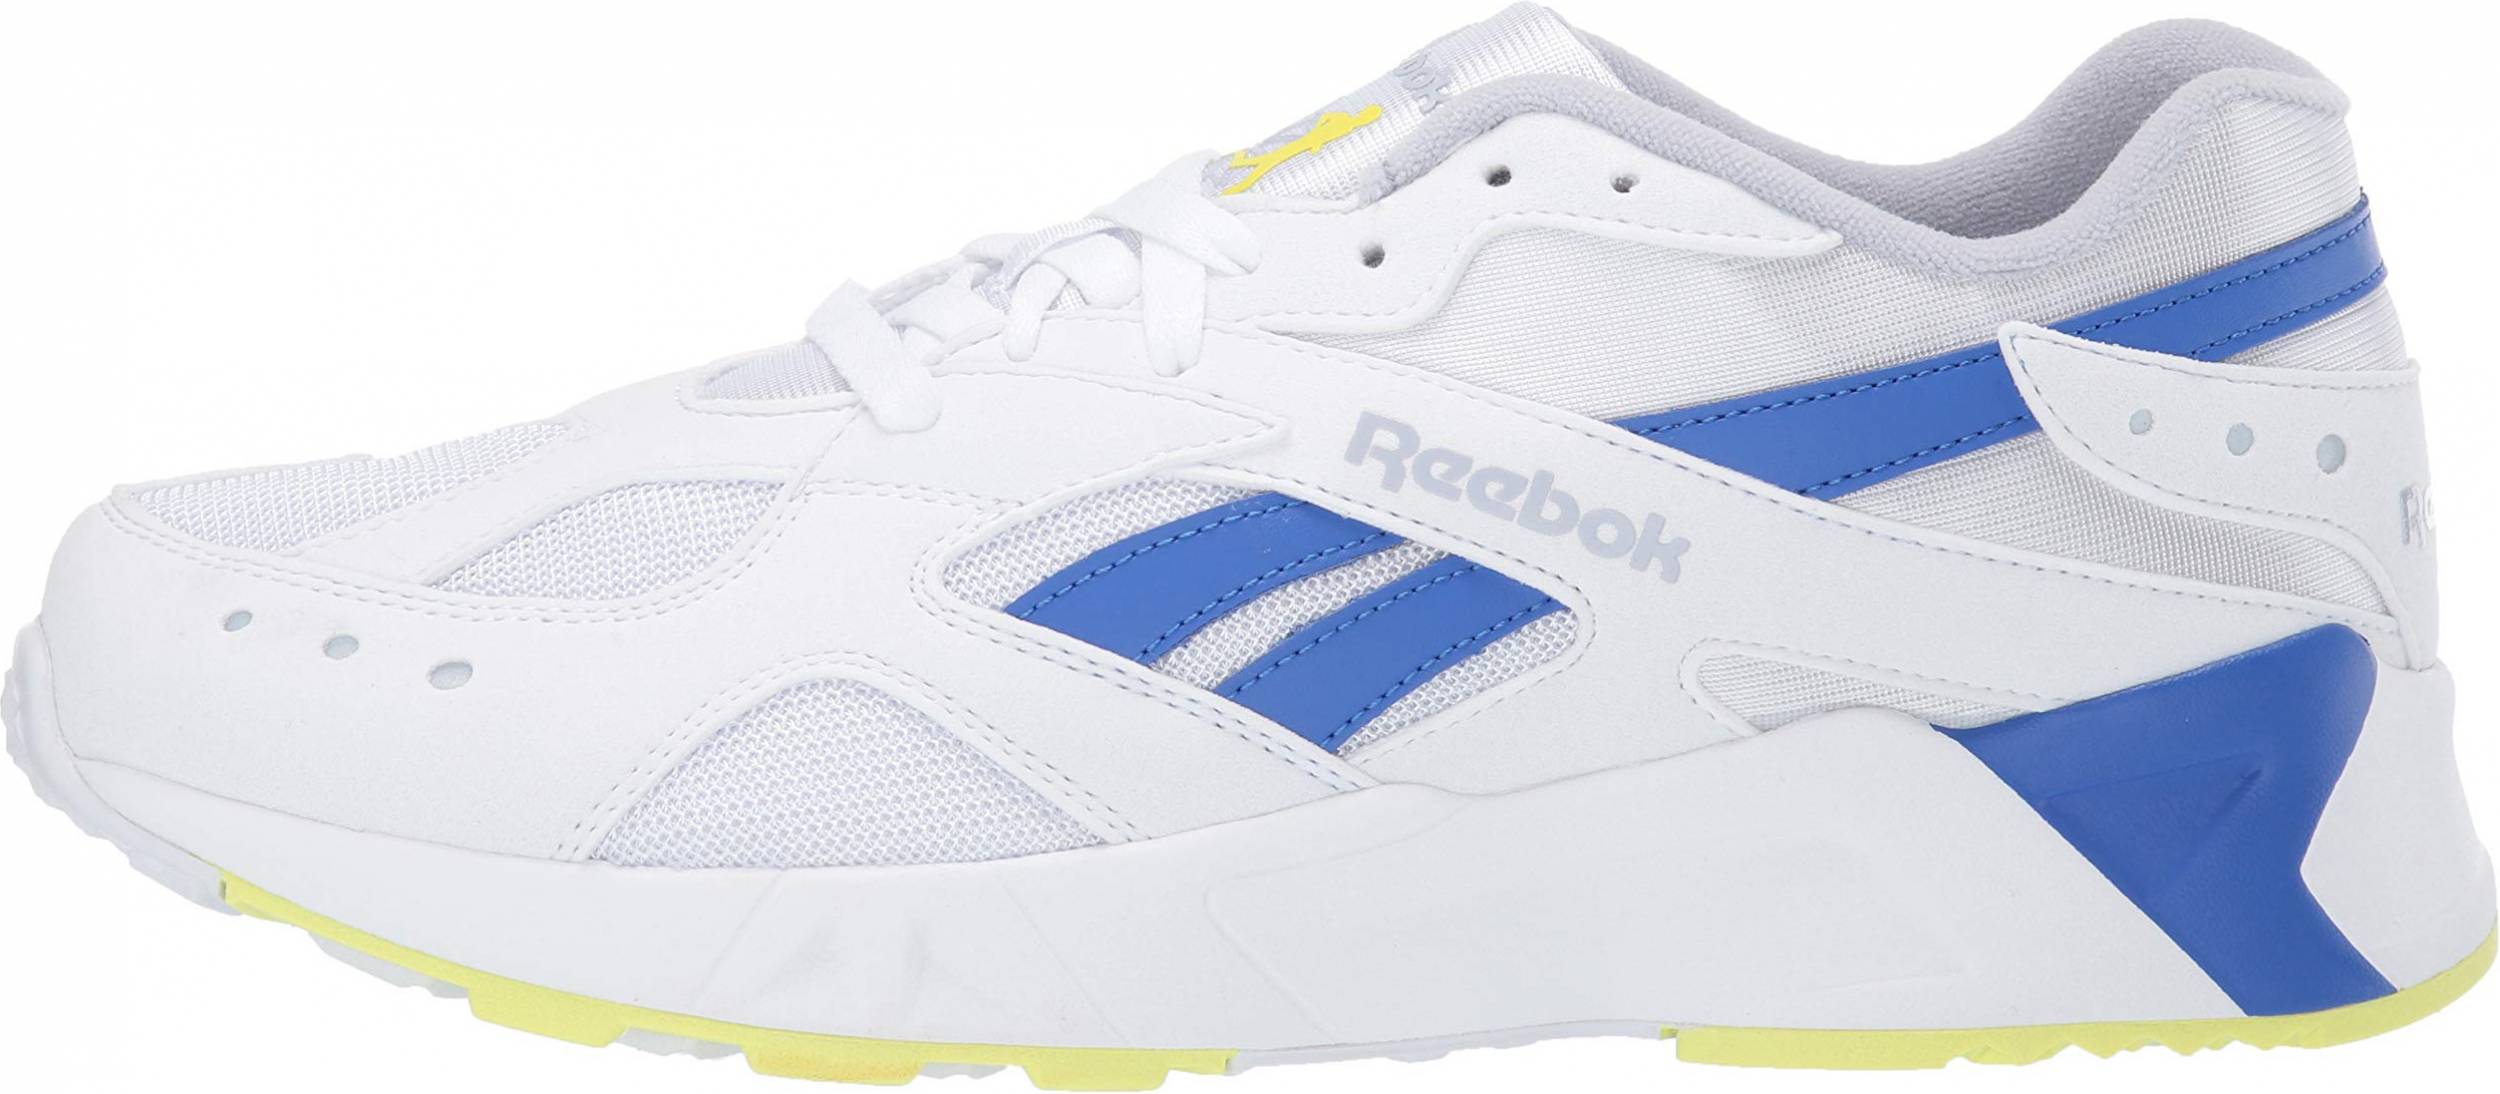 D Reebok Mens Aztrek White Low Top Running Shoes Sneakers 8 Medium BHFO 5803 